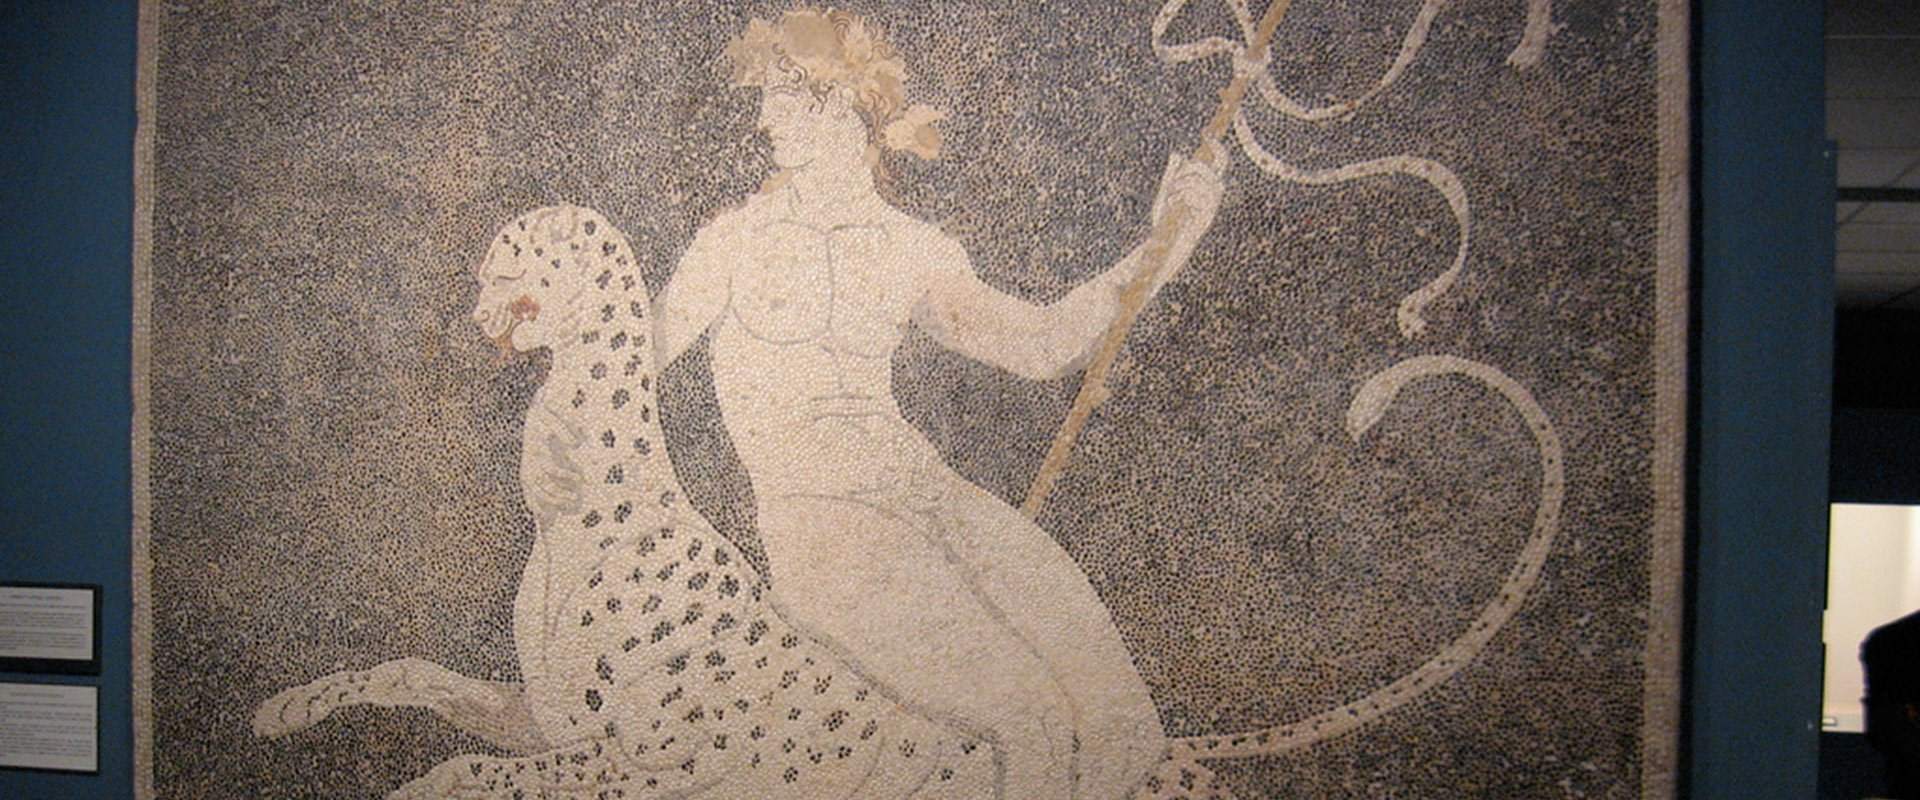 Dionysos, the Greek god of grape harvests